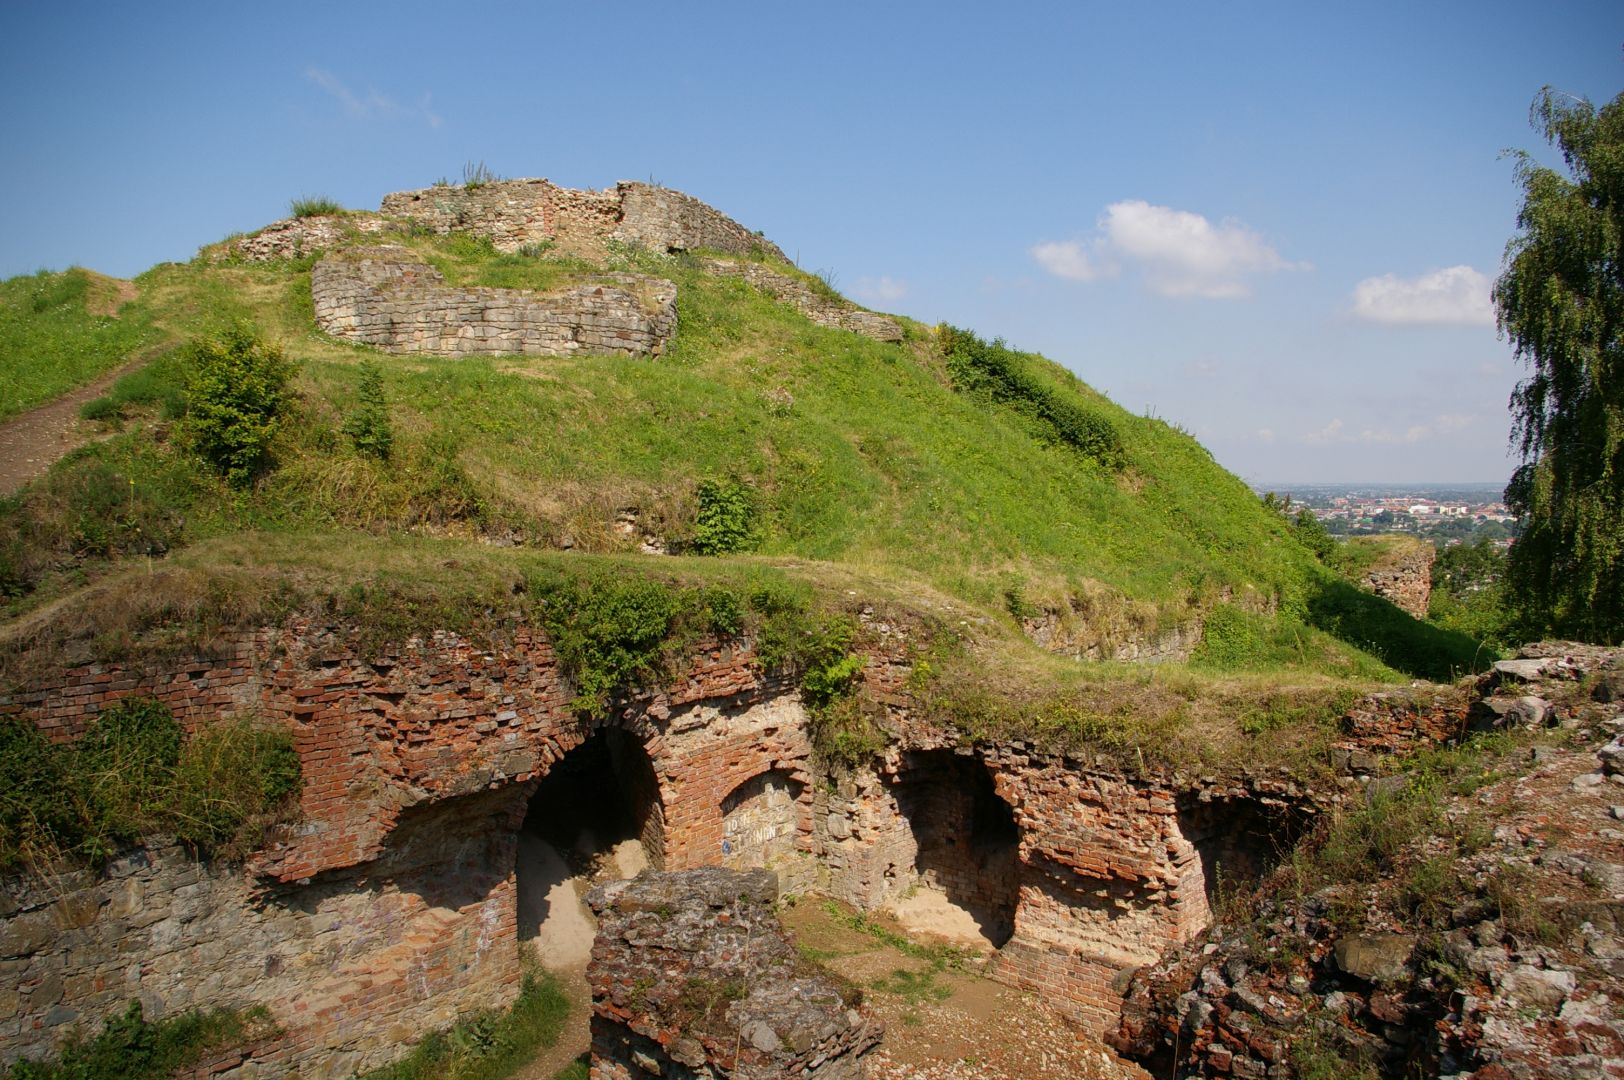 Tarnowski Castle Ruins